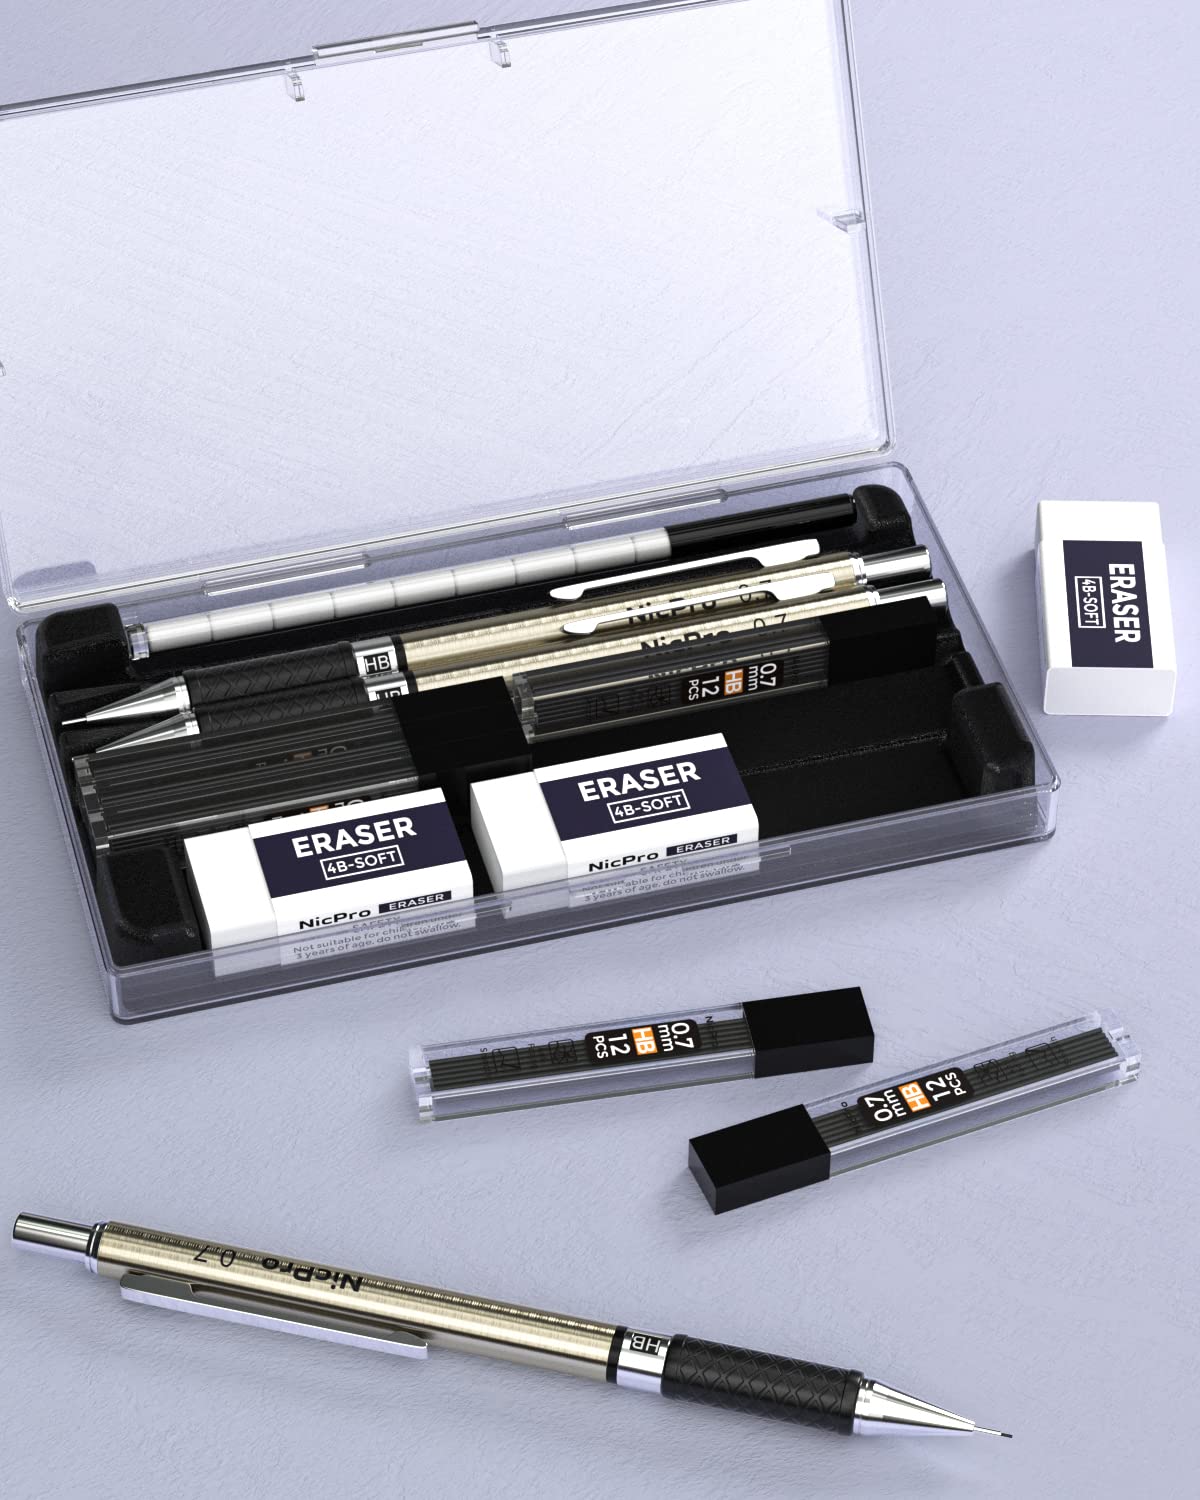 Nicpro Metal 0.9 Mechanical Pencil Set with Storage Case, 3PCS Black 0